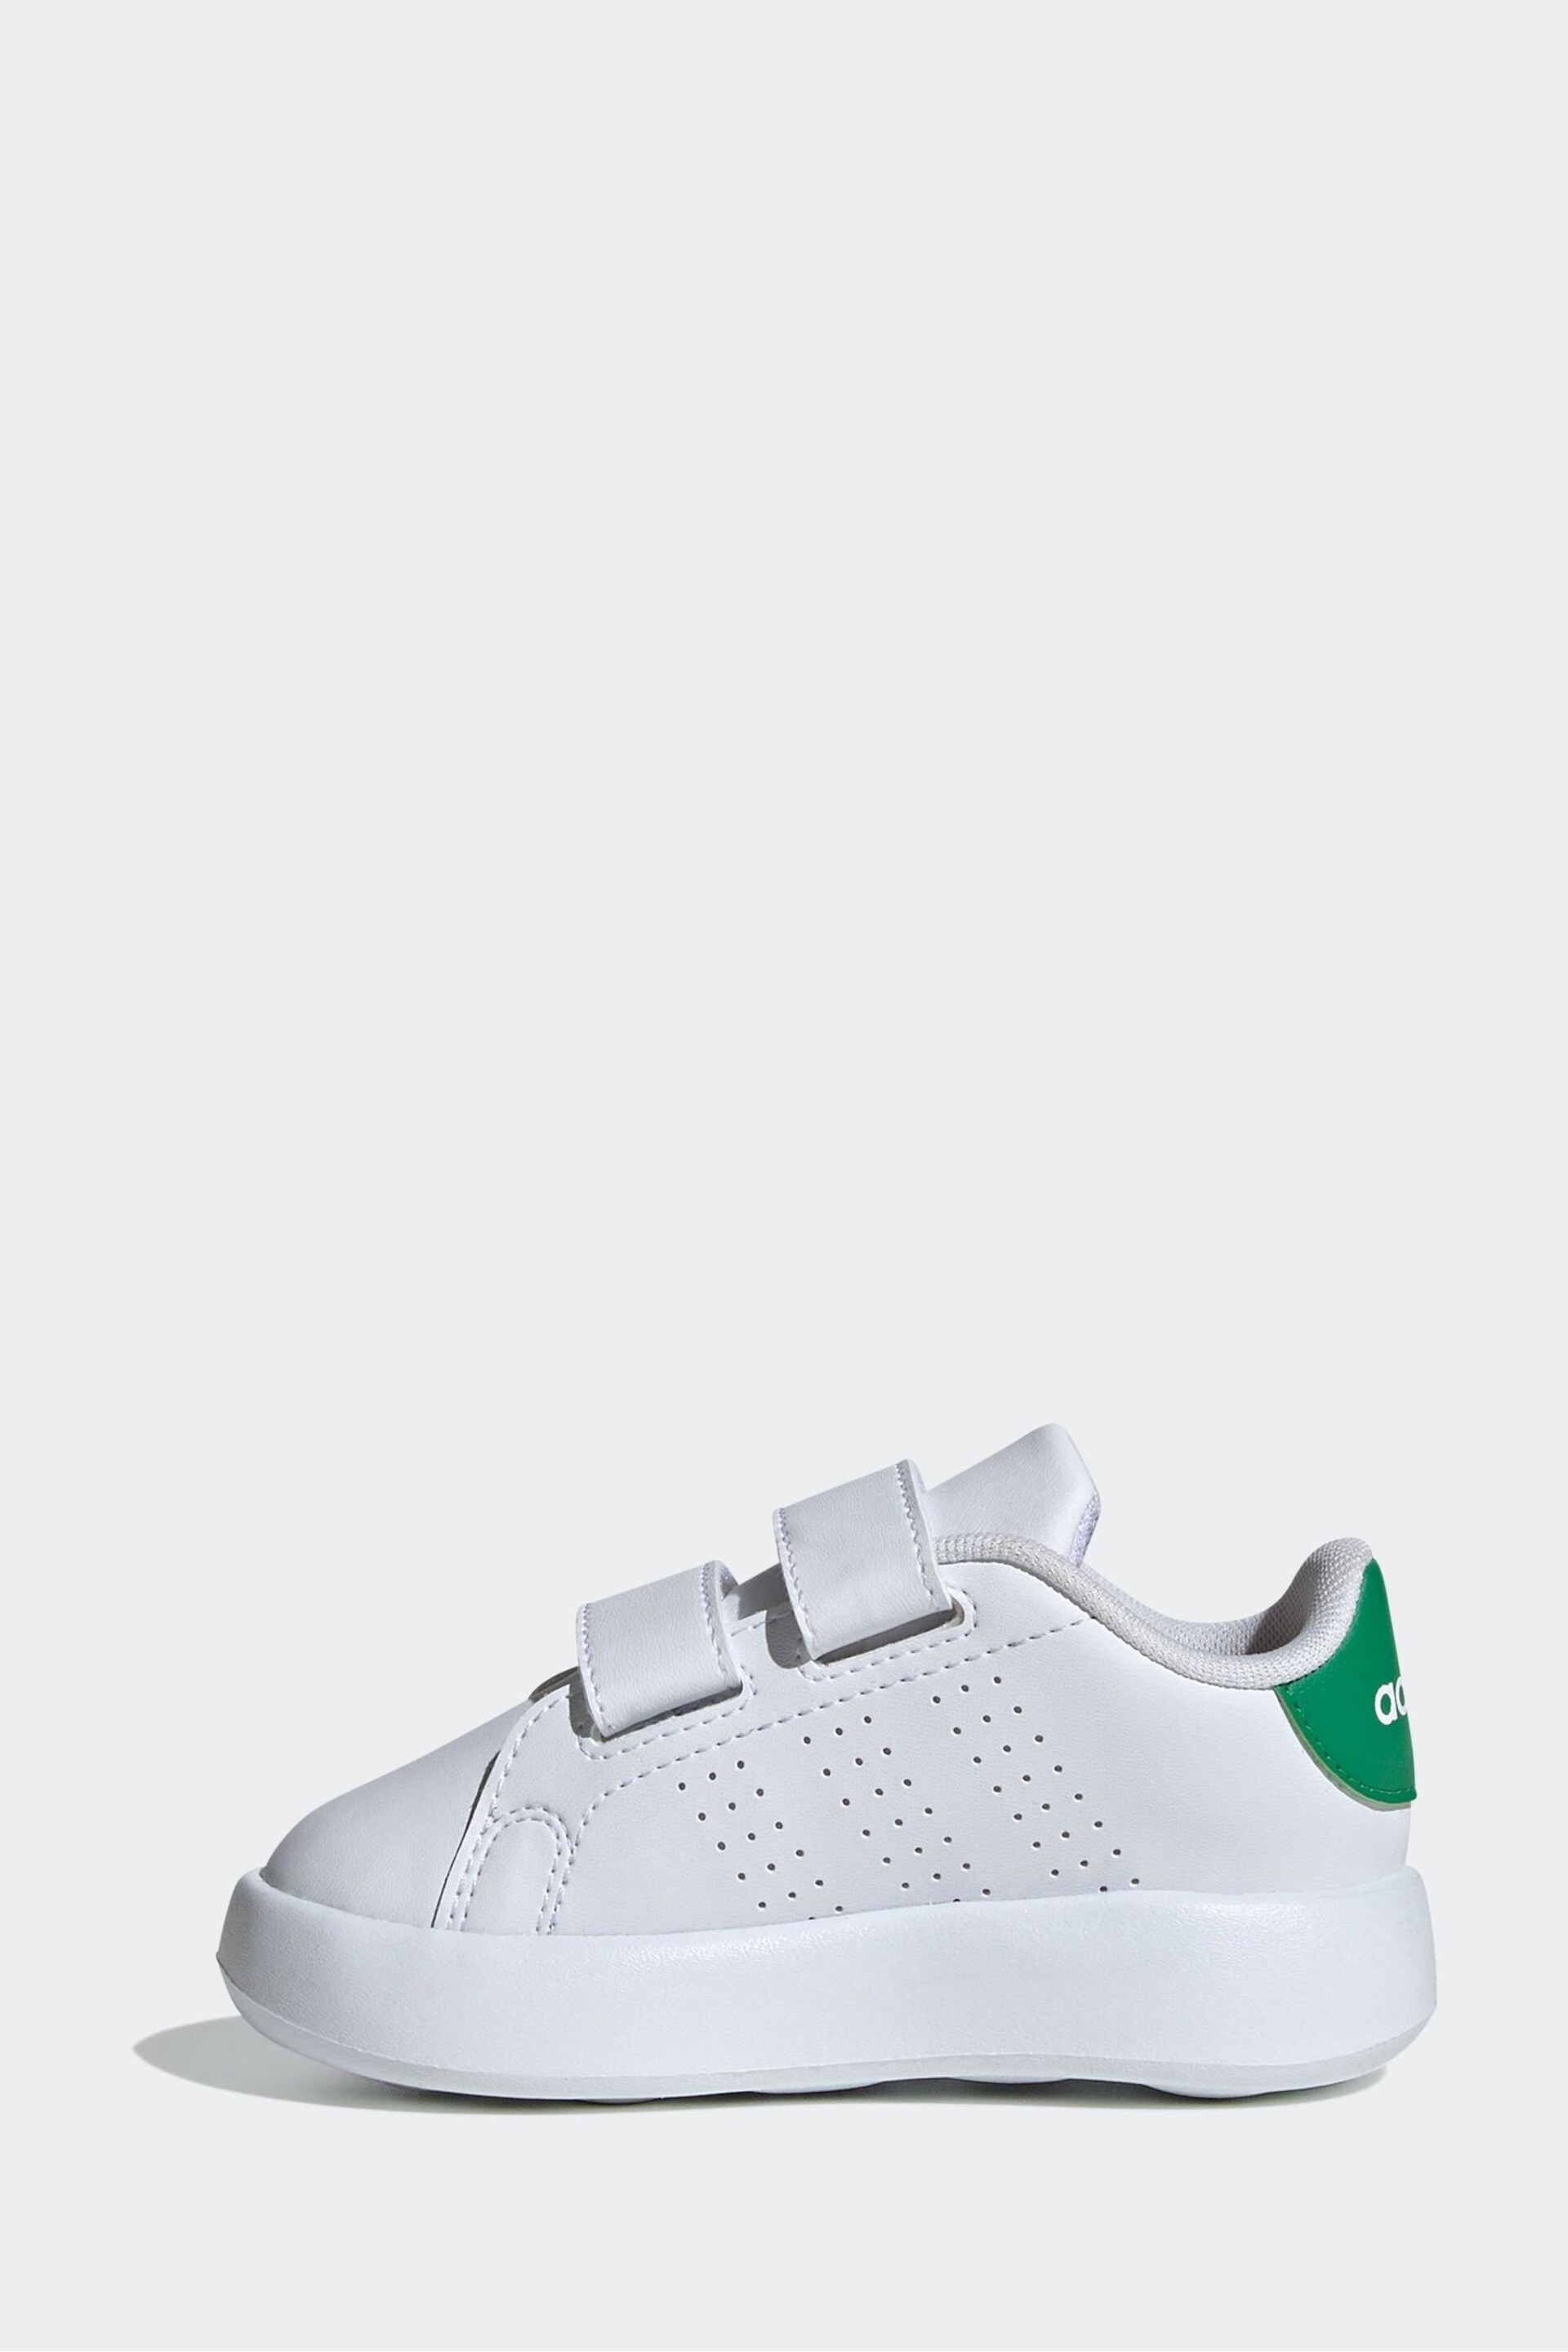 adidas White/Green Advantage Shoes Kids - Image 3 of 9